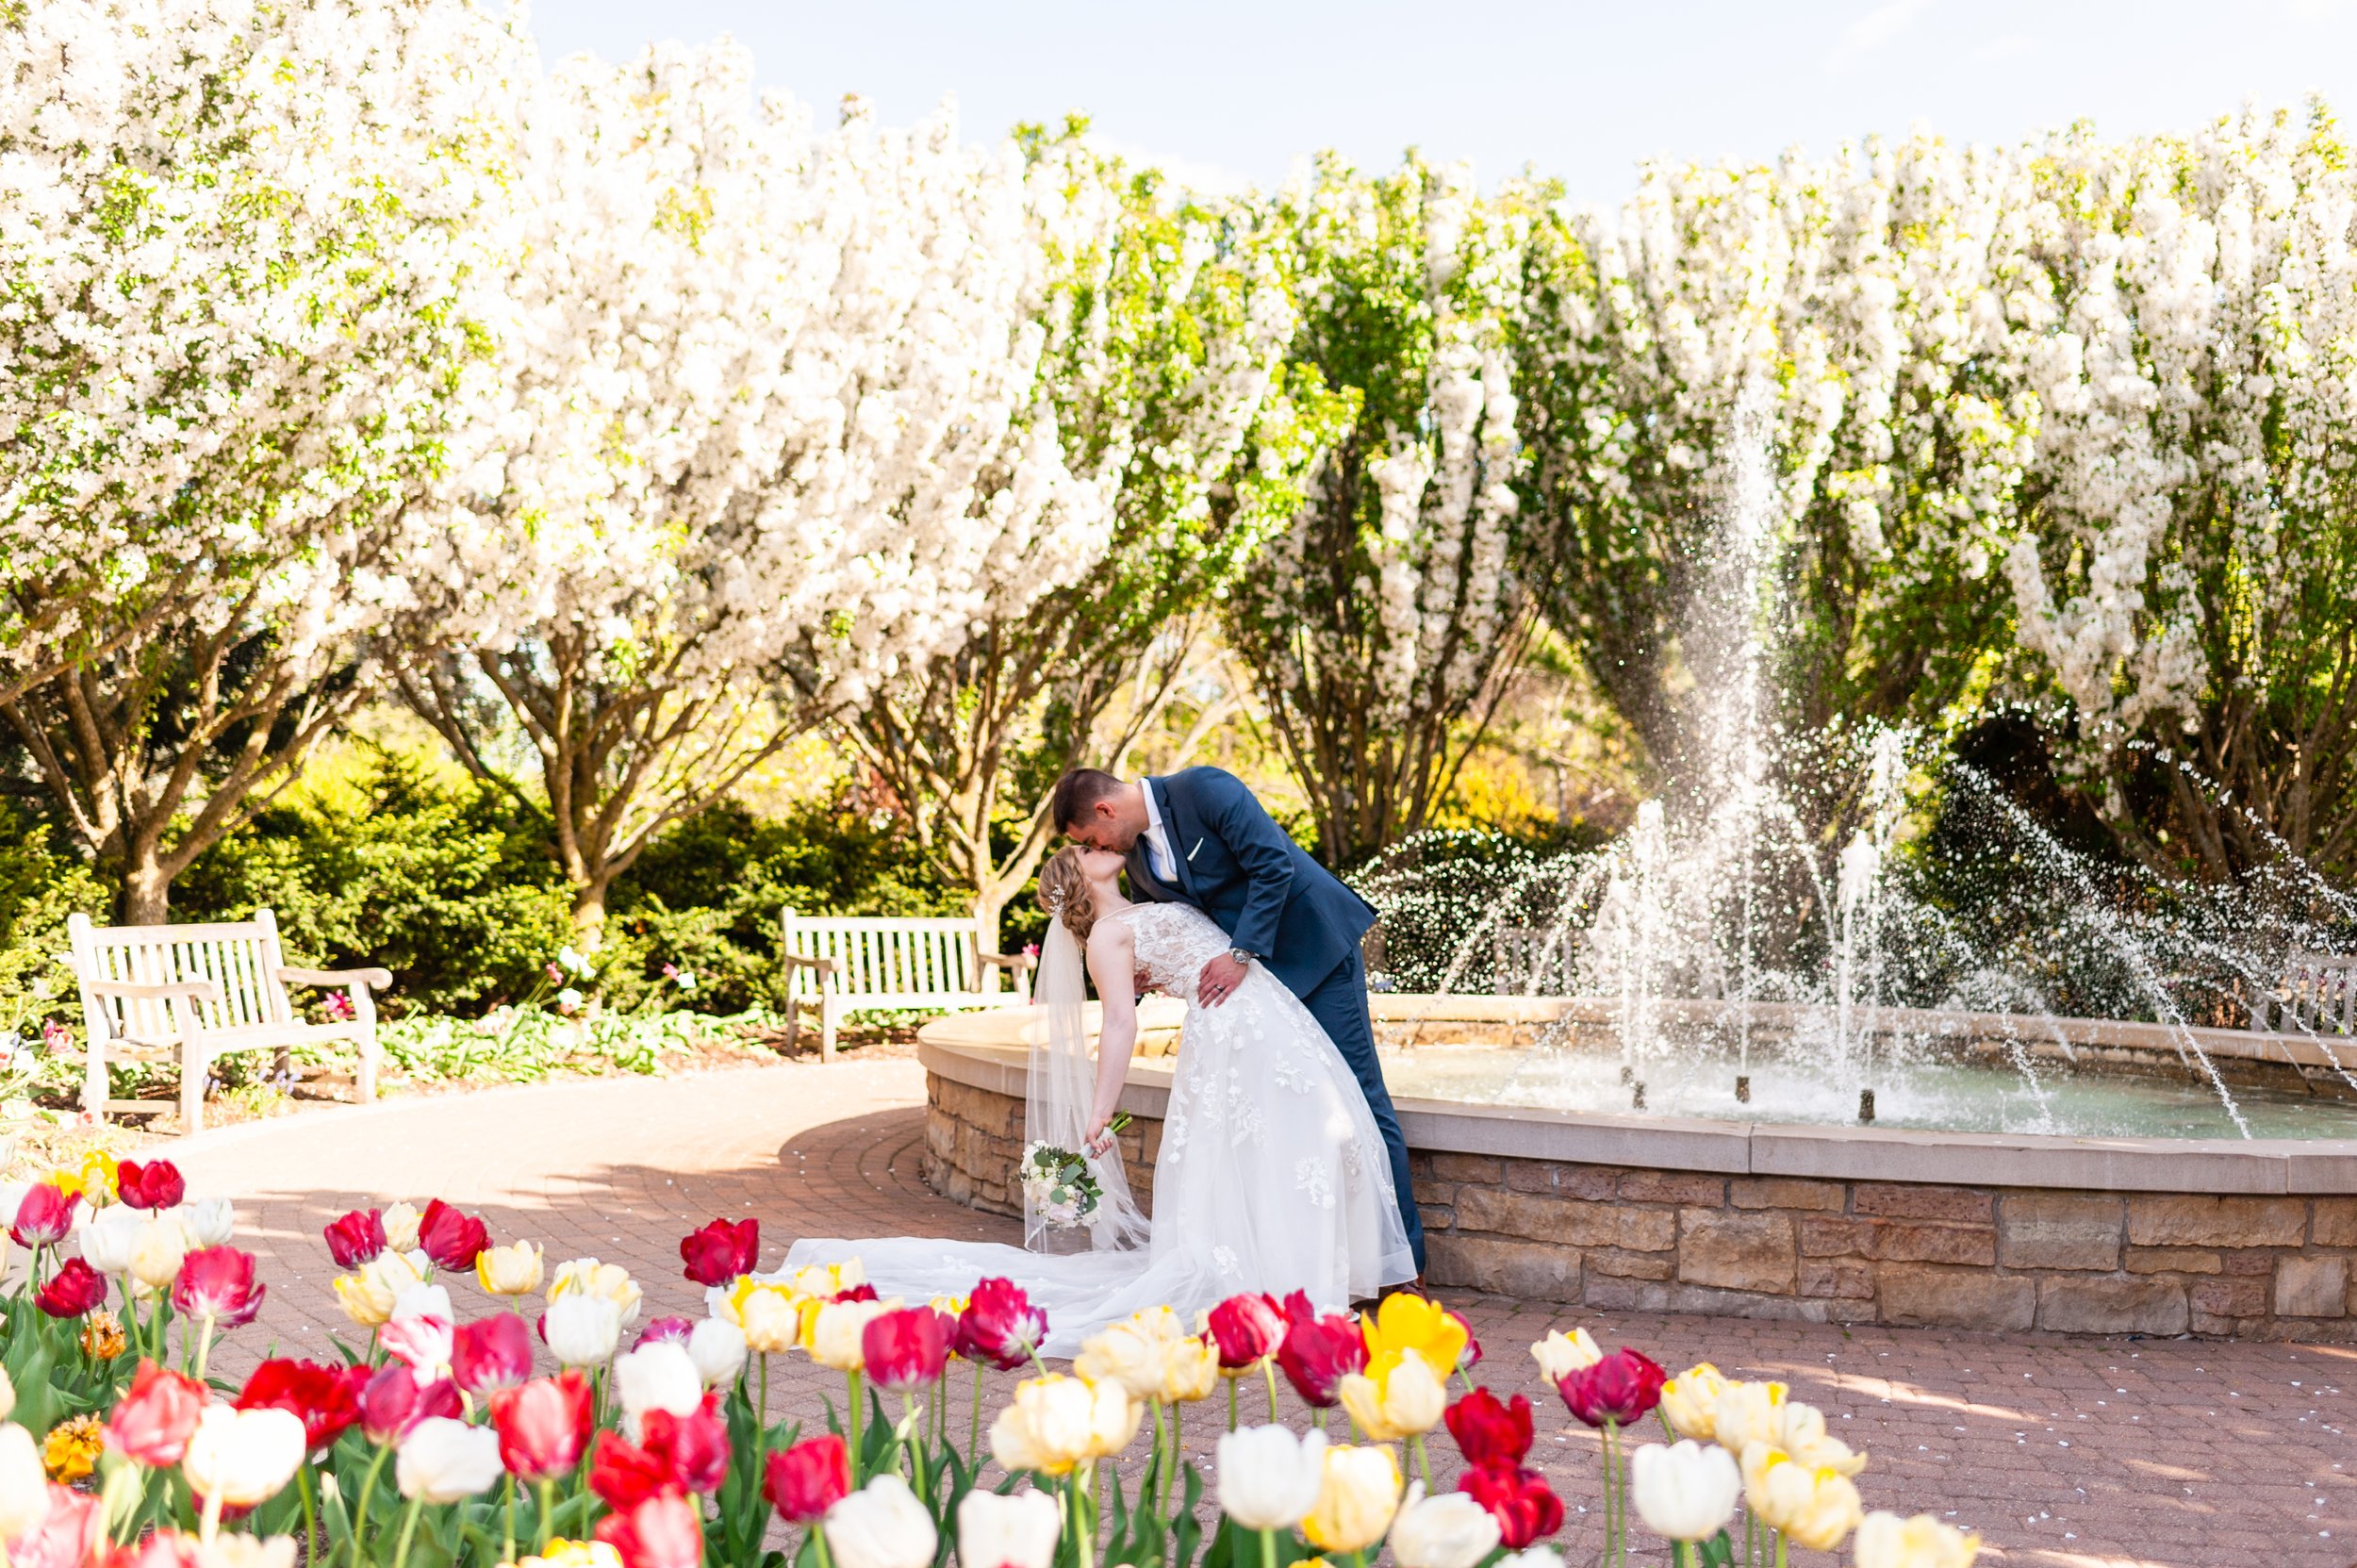 Having a Spring time wedding at Green Bay Botanical Gardens